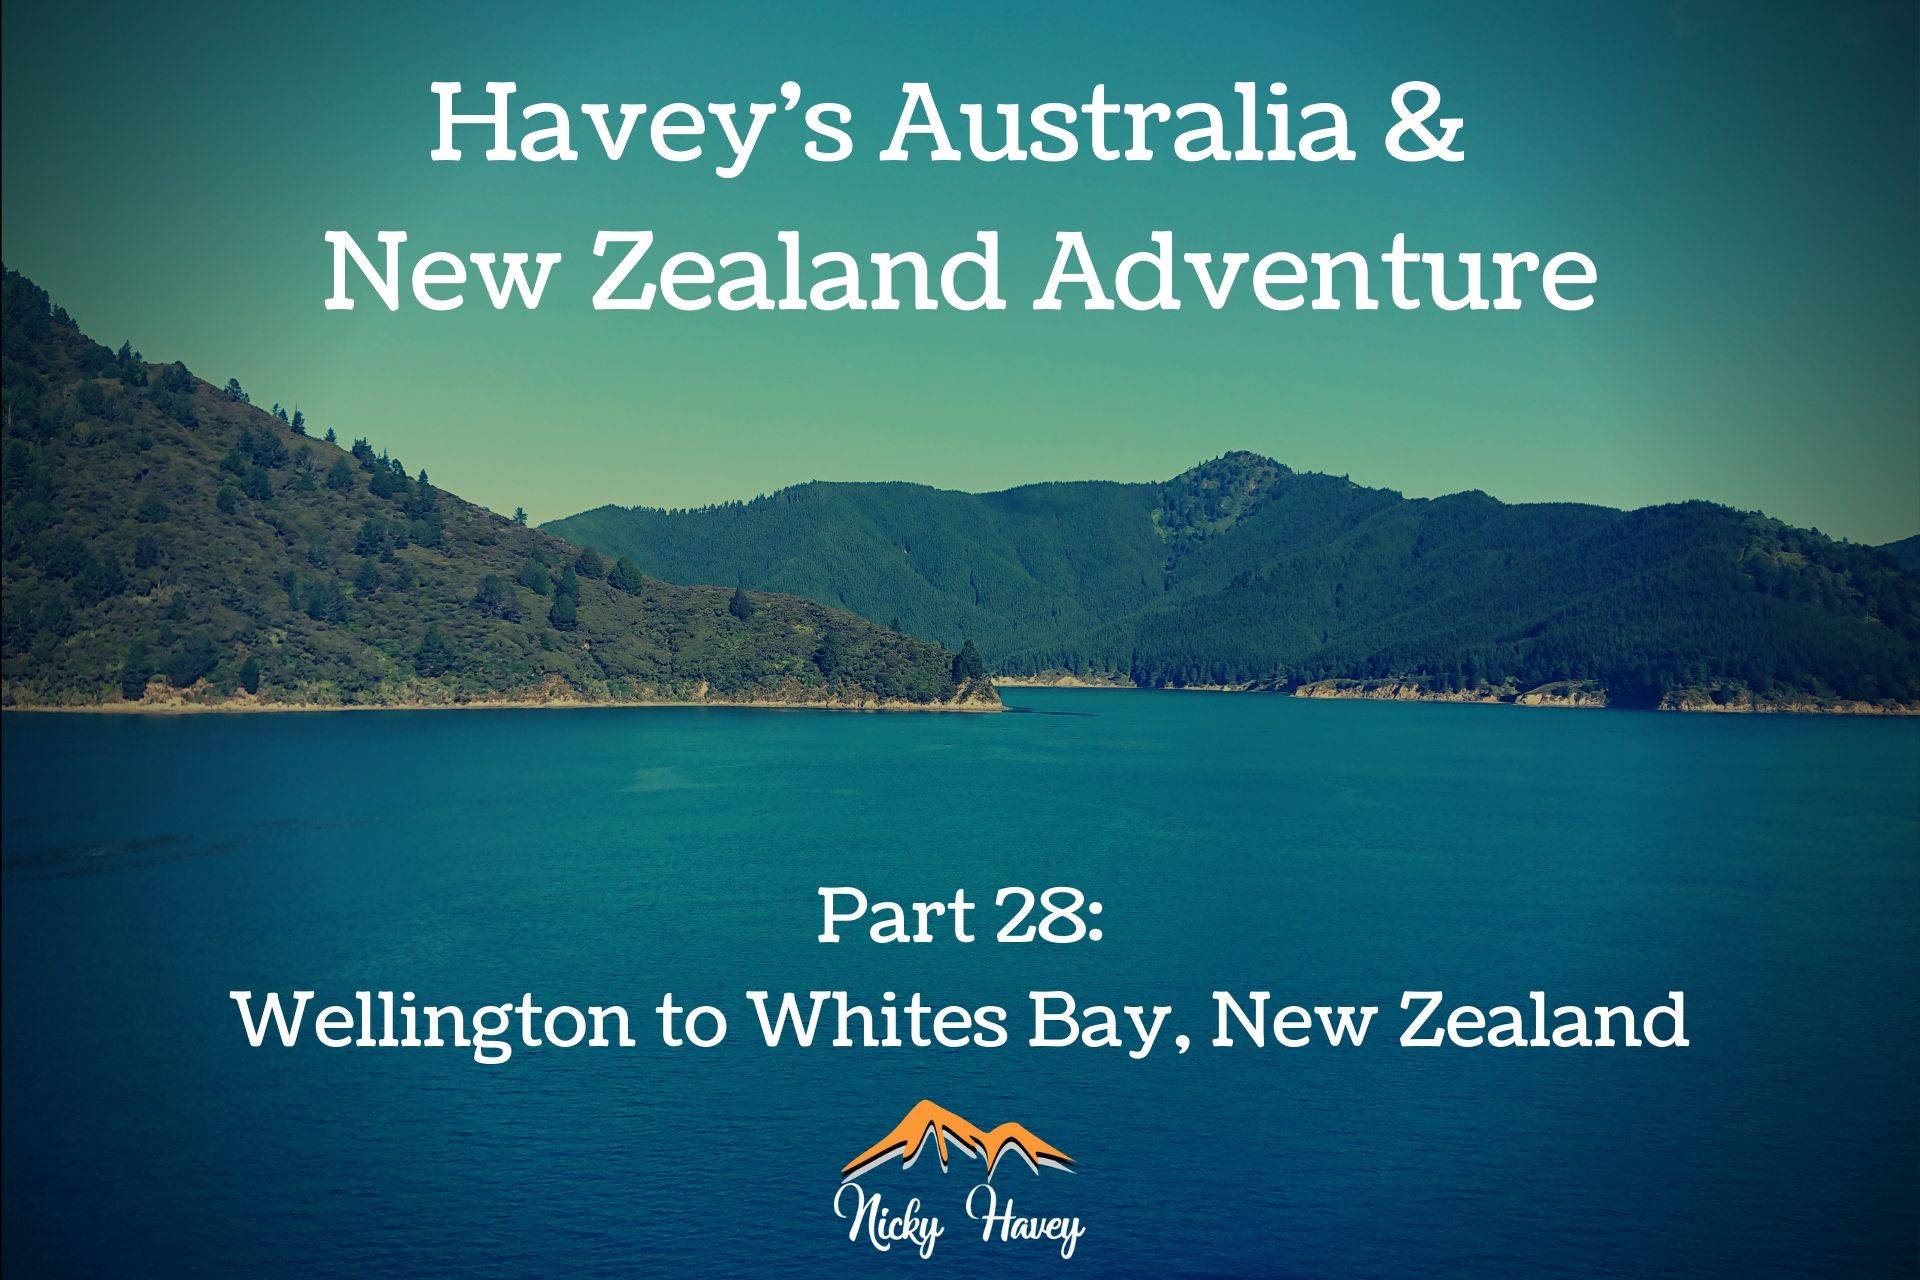 Havey's Australia & New Zealand Adventure Part 28 - Wellington to Whites Bay, New Zealand